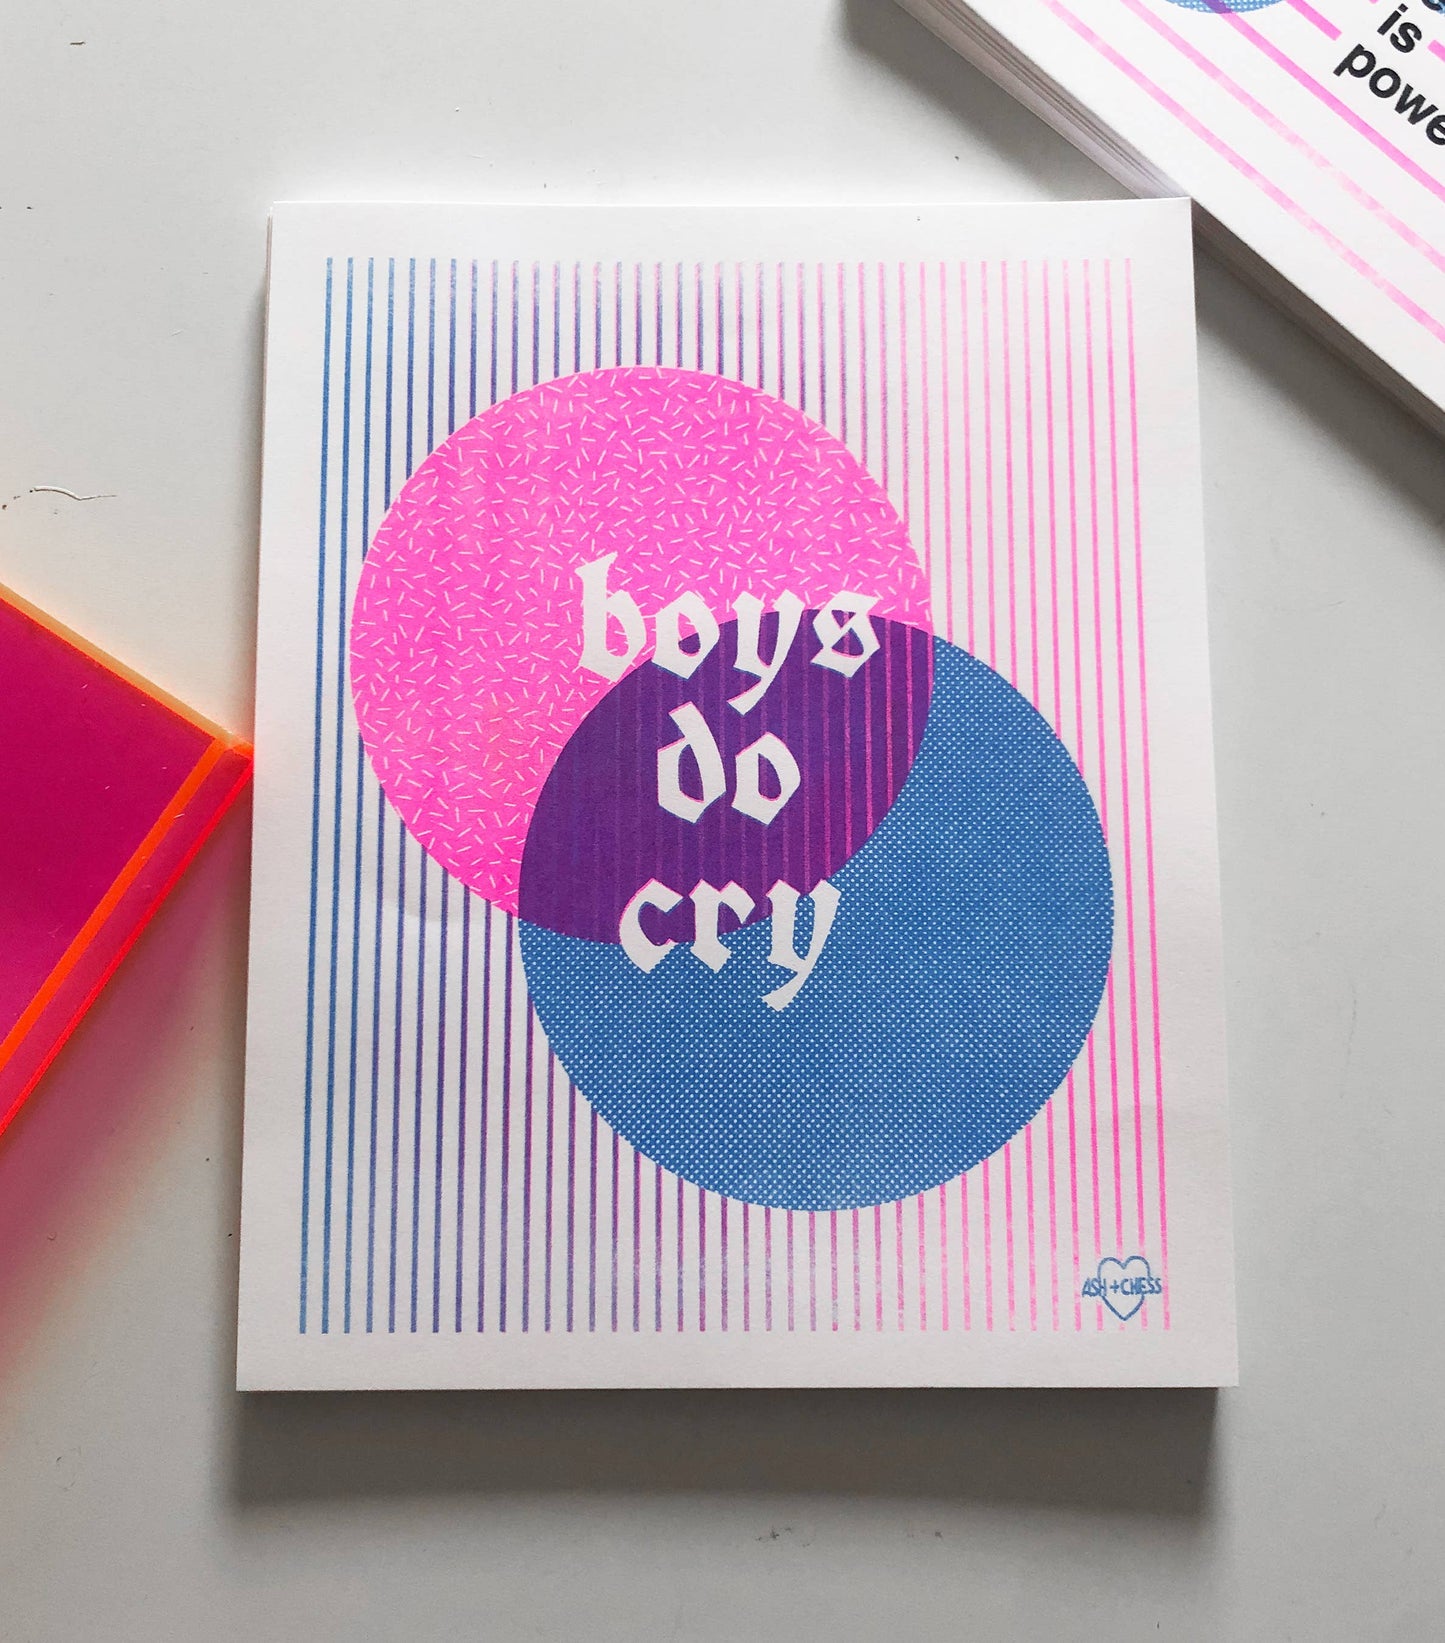 8"x10" Boys Do Cry Risograph Print